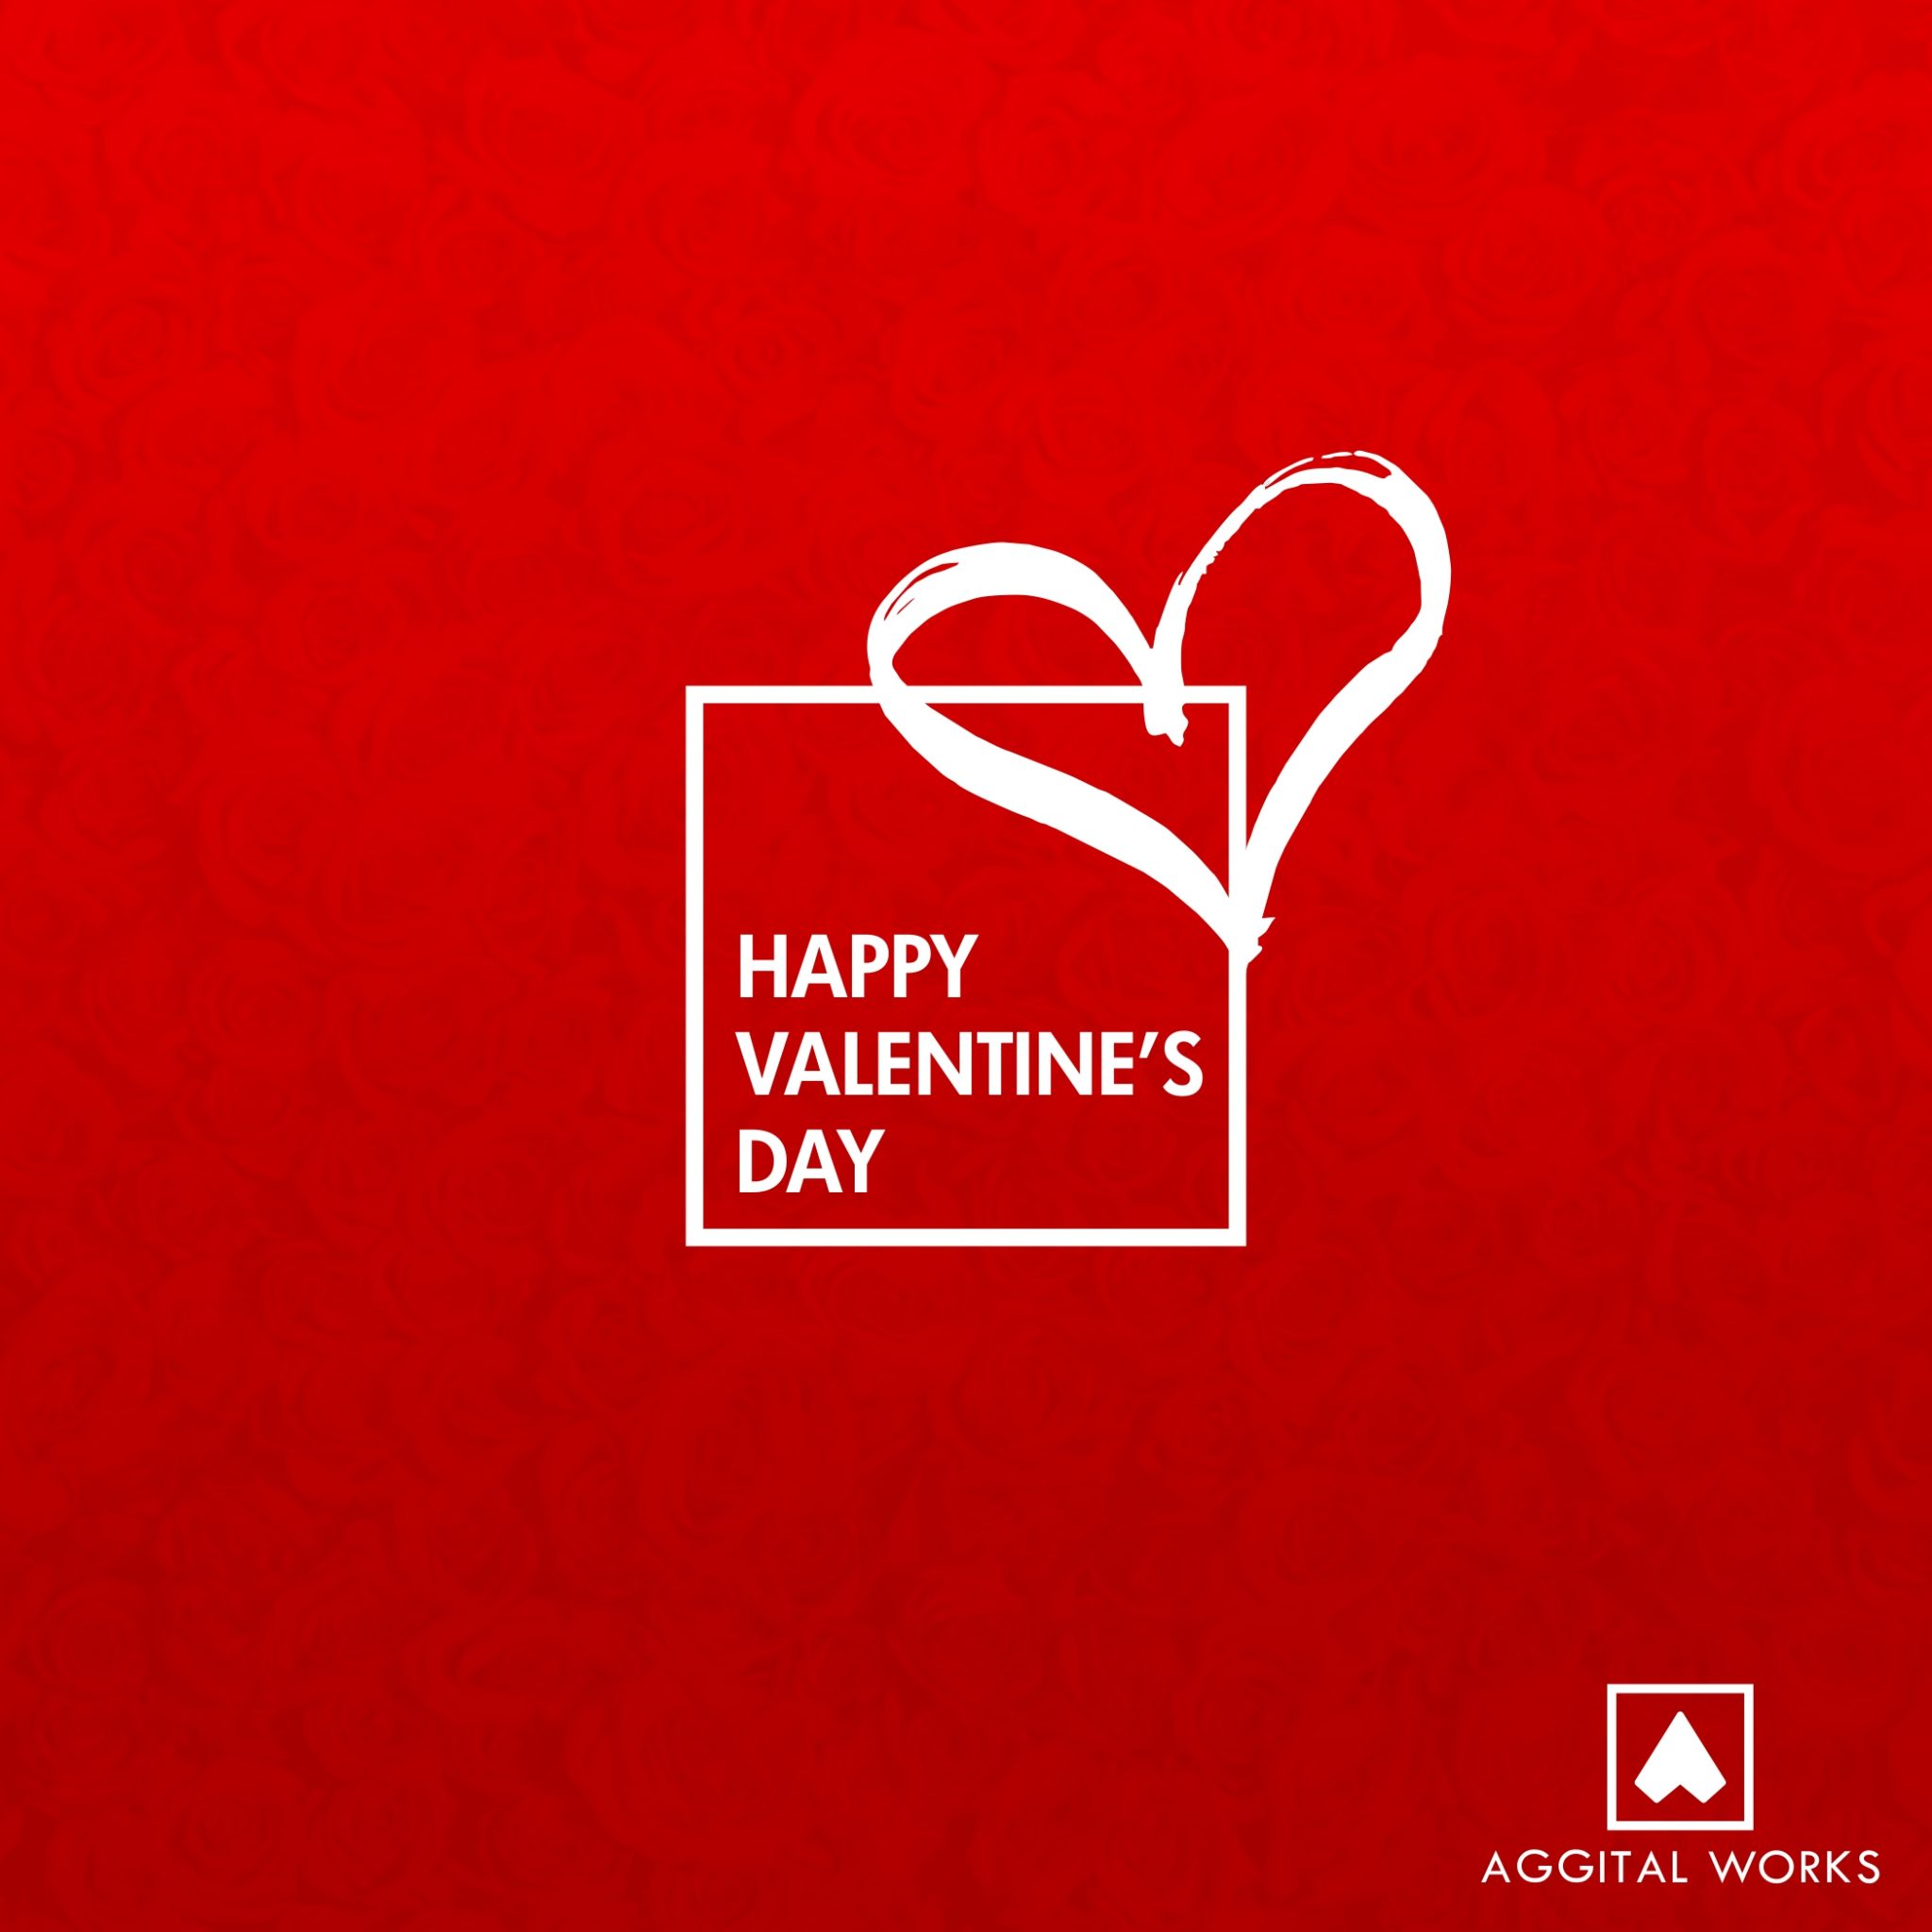 It's The Season Of Love, Happy Valentines Day!